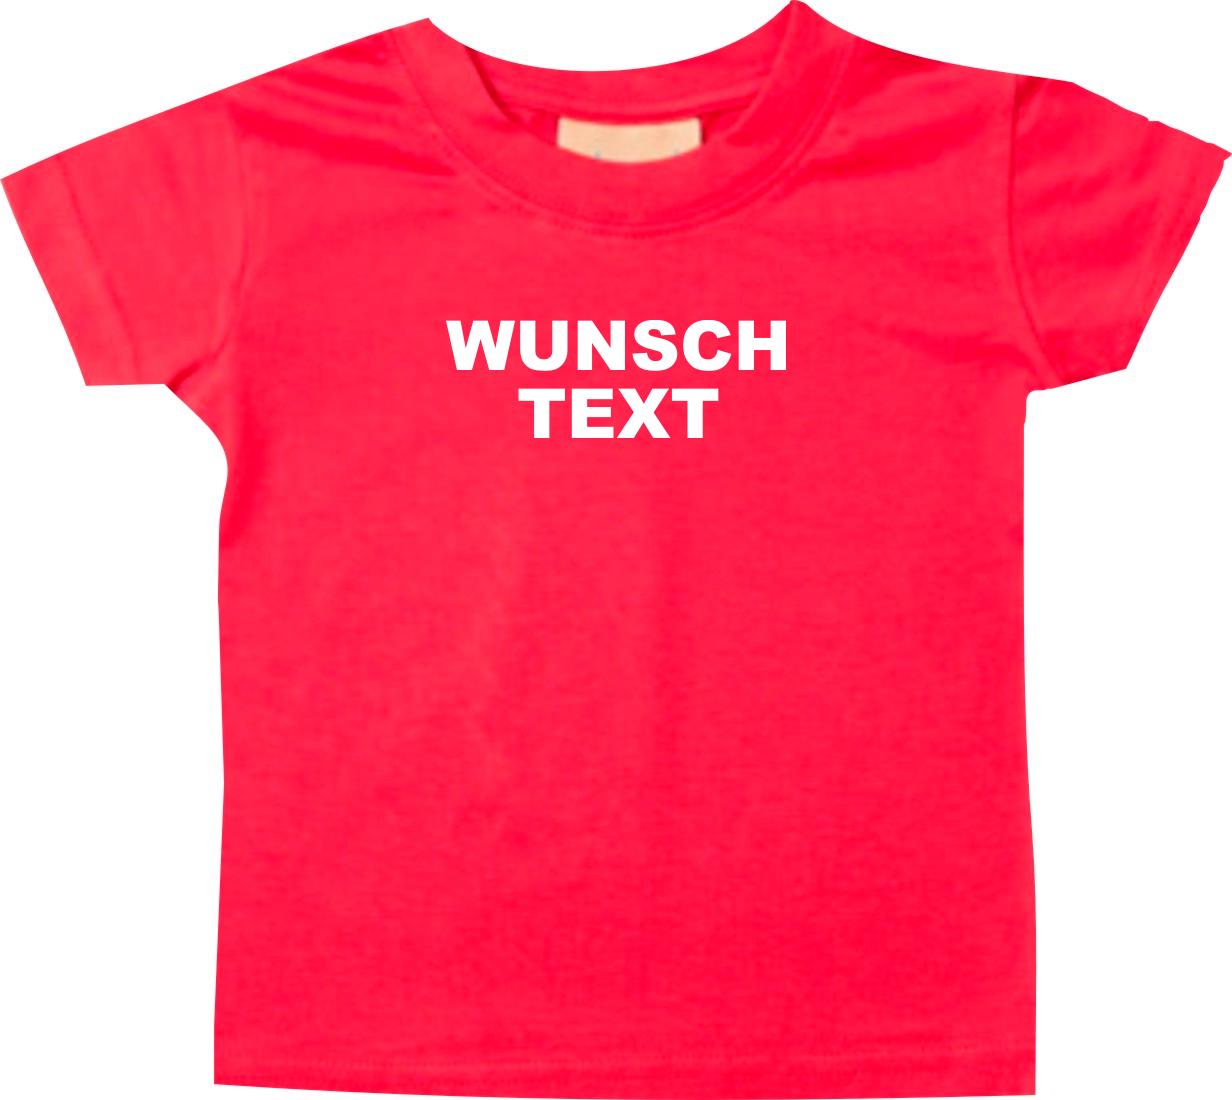 individueller Aufdruck Logo Kinder Kids T-Shirt mit Wunschdruck Wunschtext 